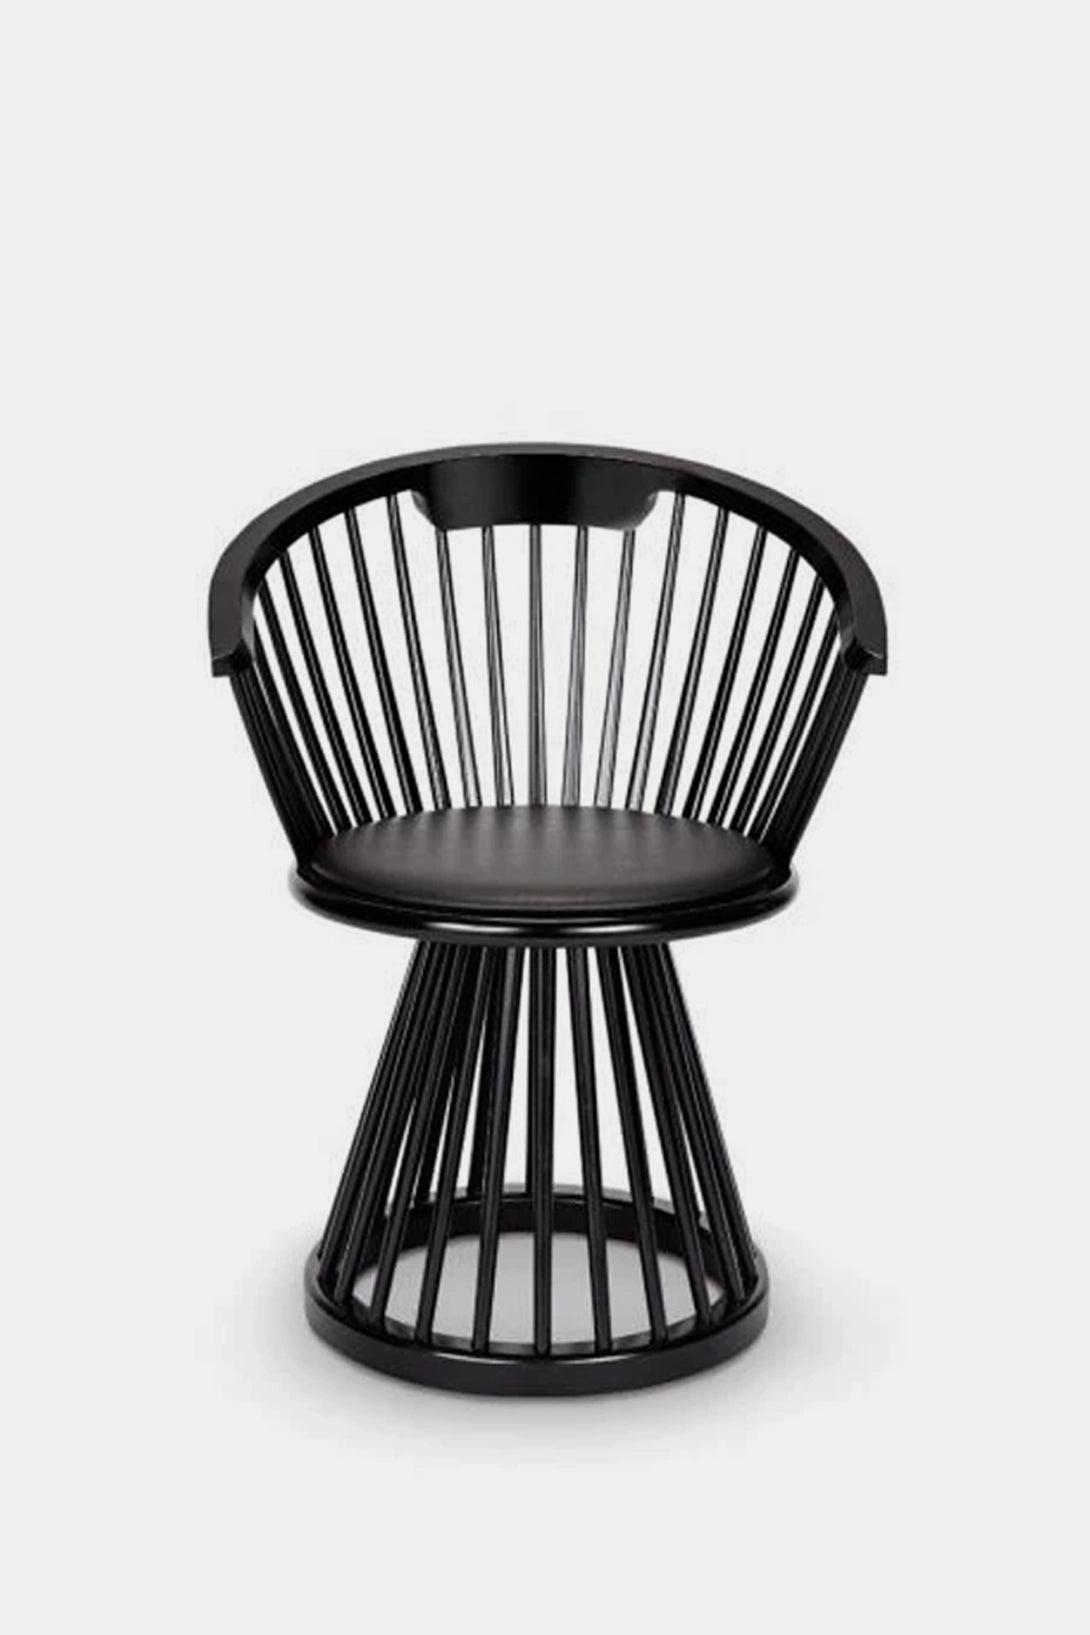 Fan Dining Chair 店舗什器 アパレル 空間デザイン ベントウッド 